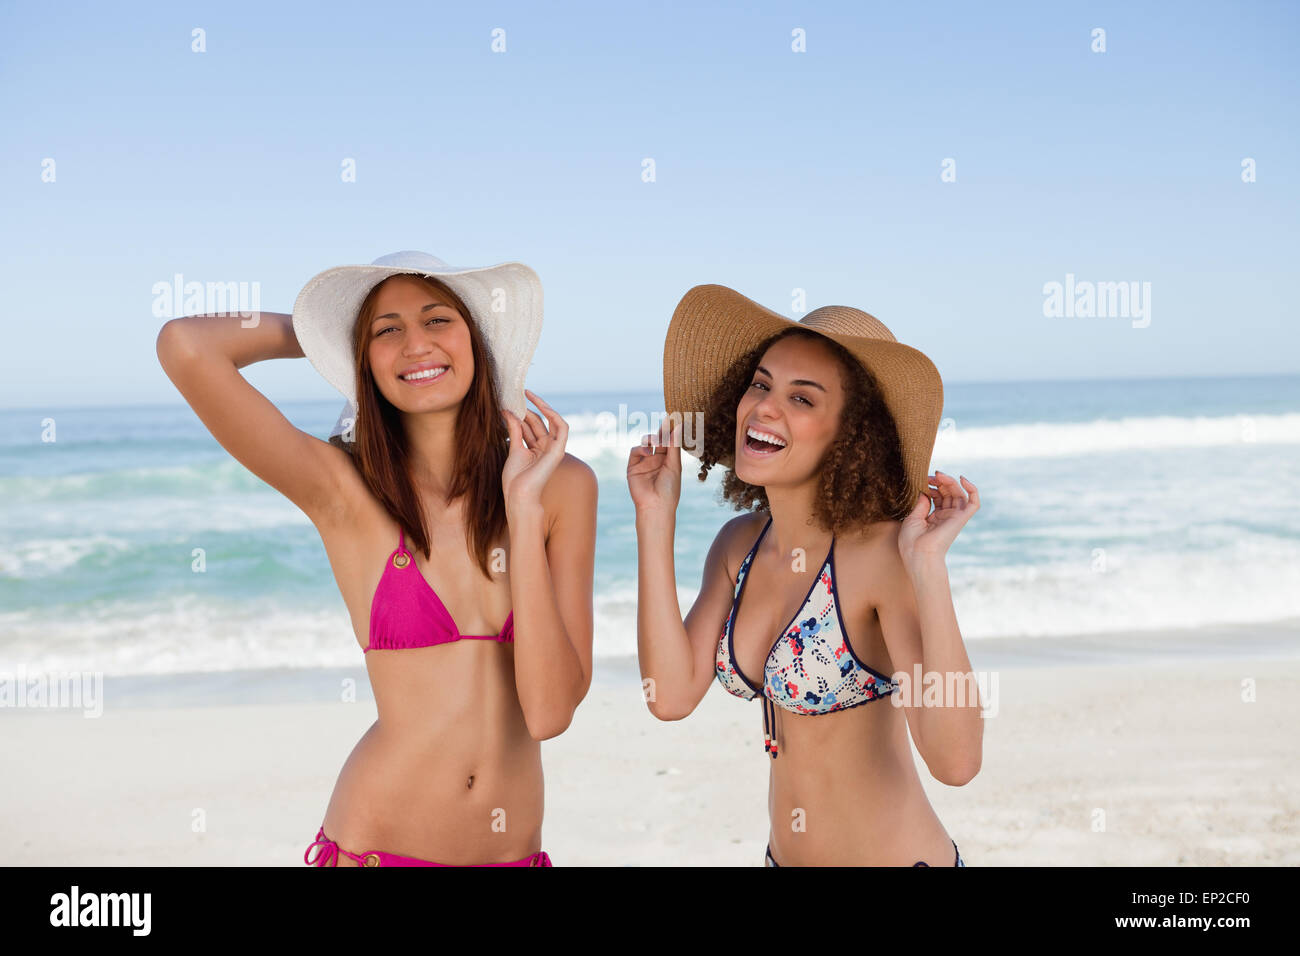 Half bikini hi-res stock photography and images pic